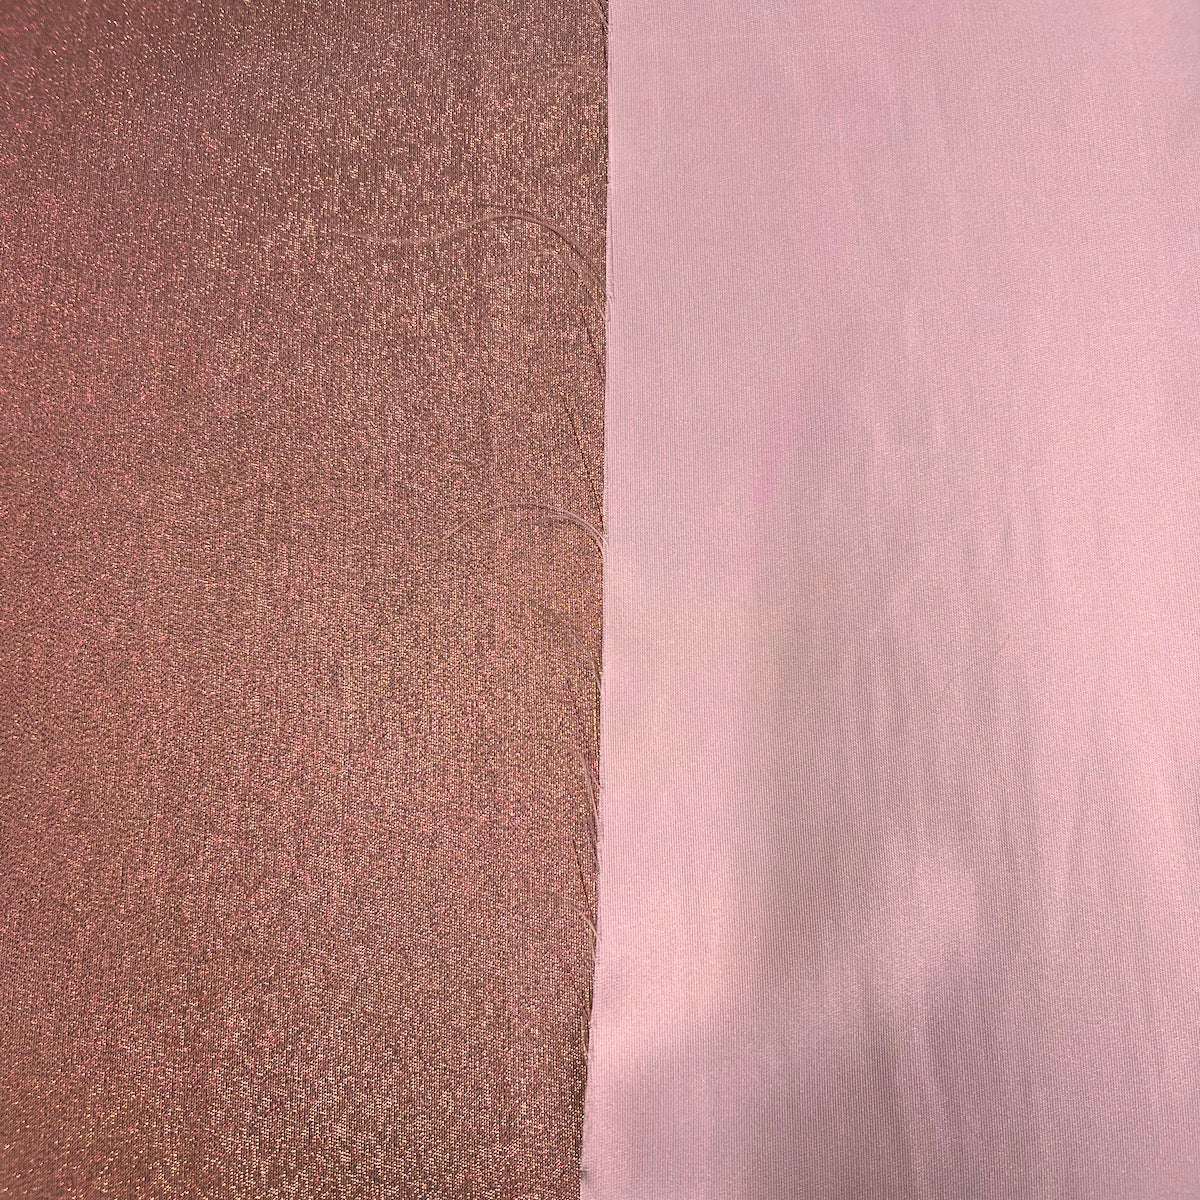 Rose Pink | Gold Iridescent Glitter Lurex Faux Satin Fabric